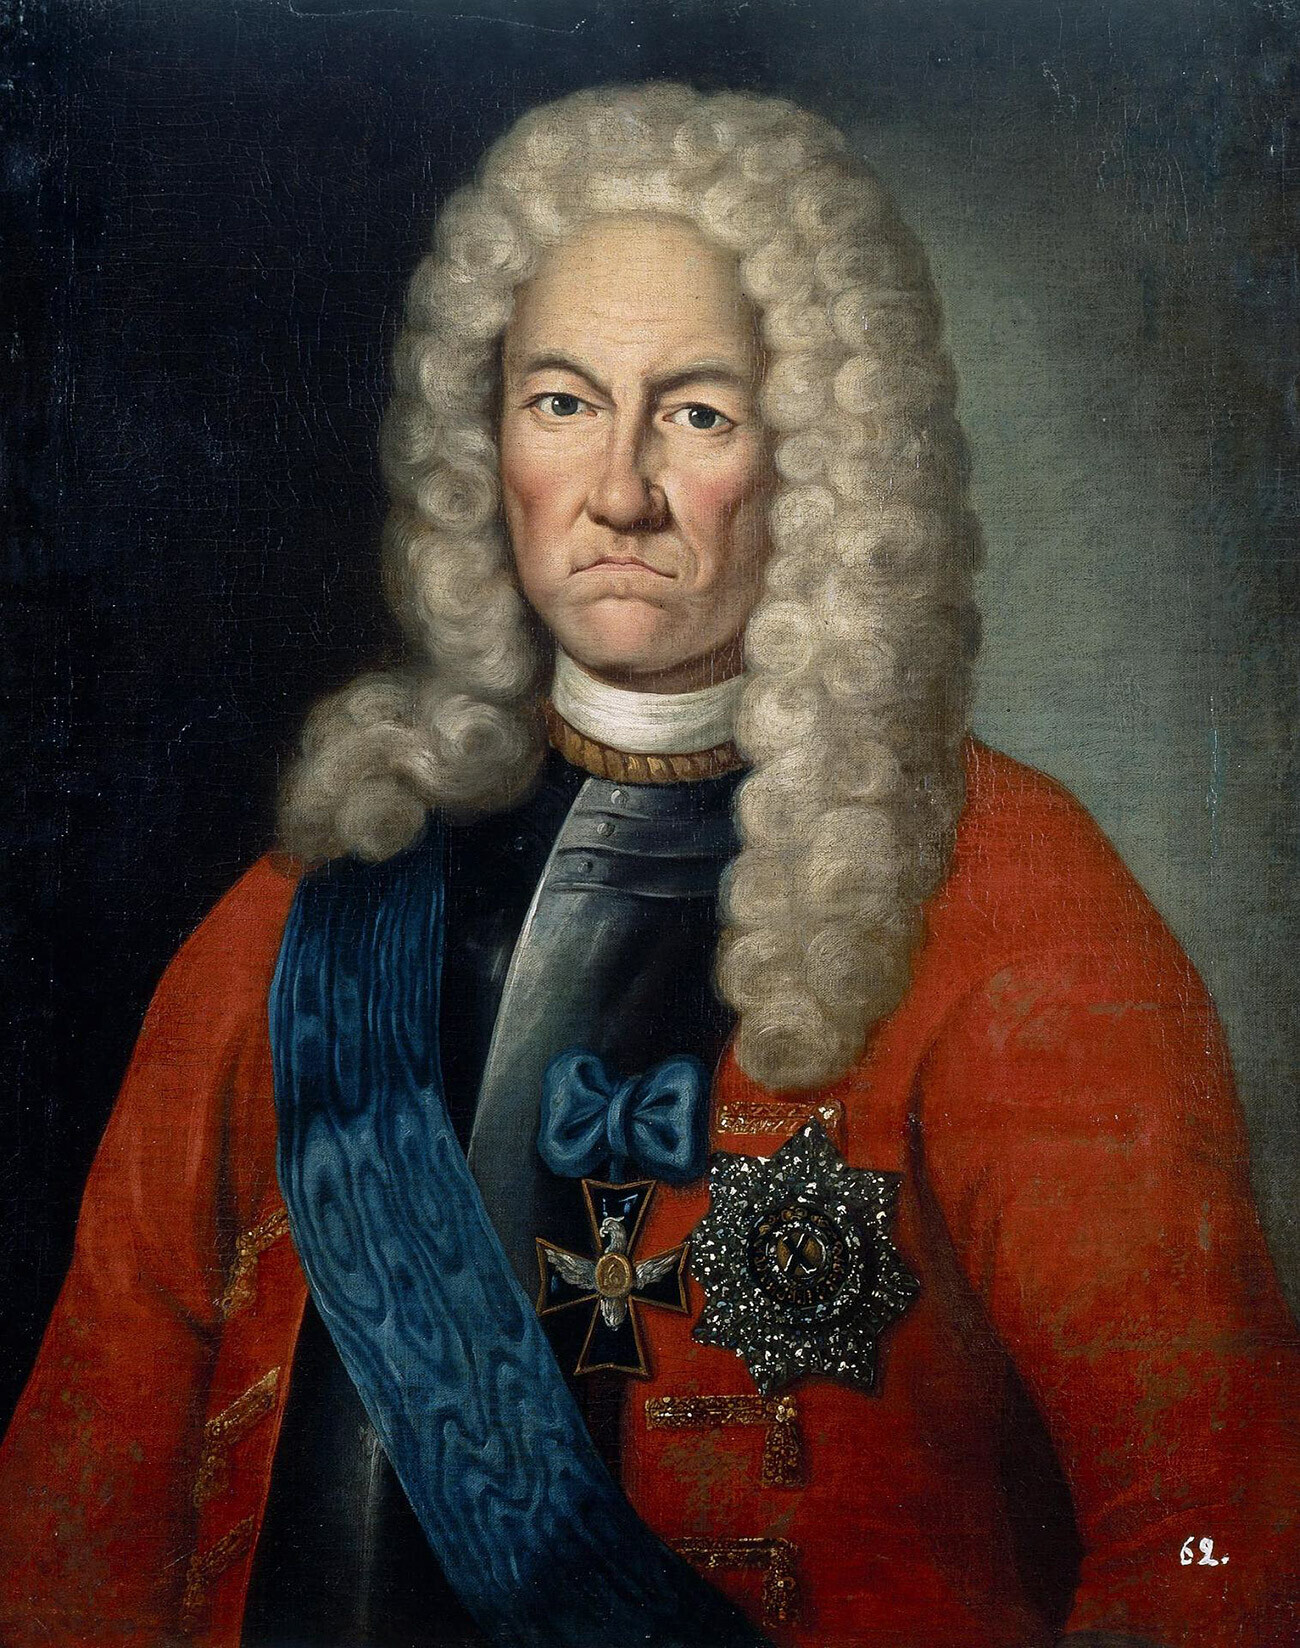 Портрет на Јаков Вилимович Брус.
